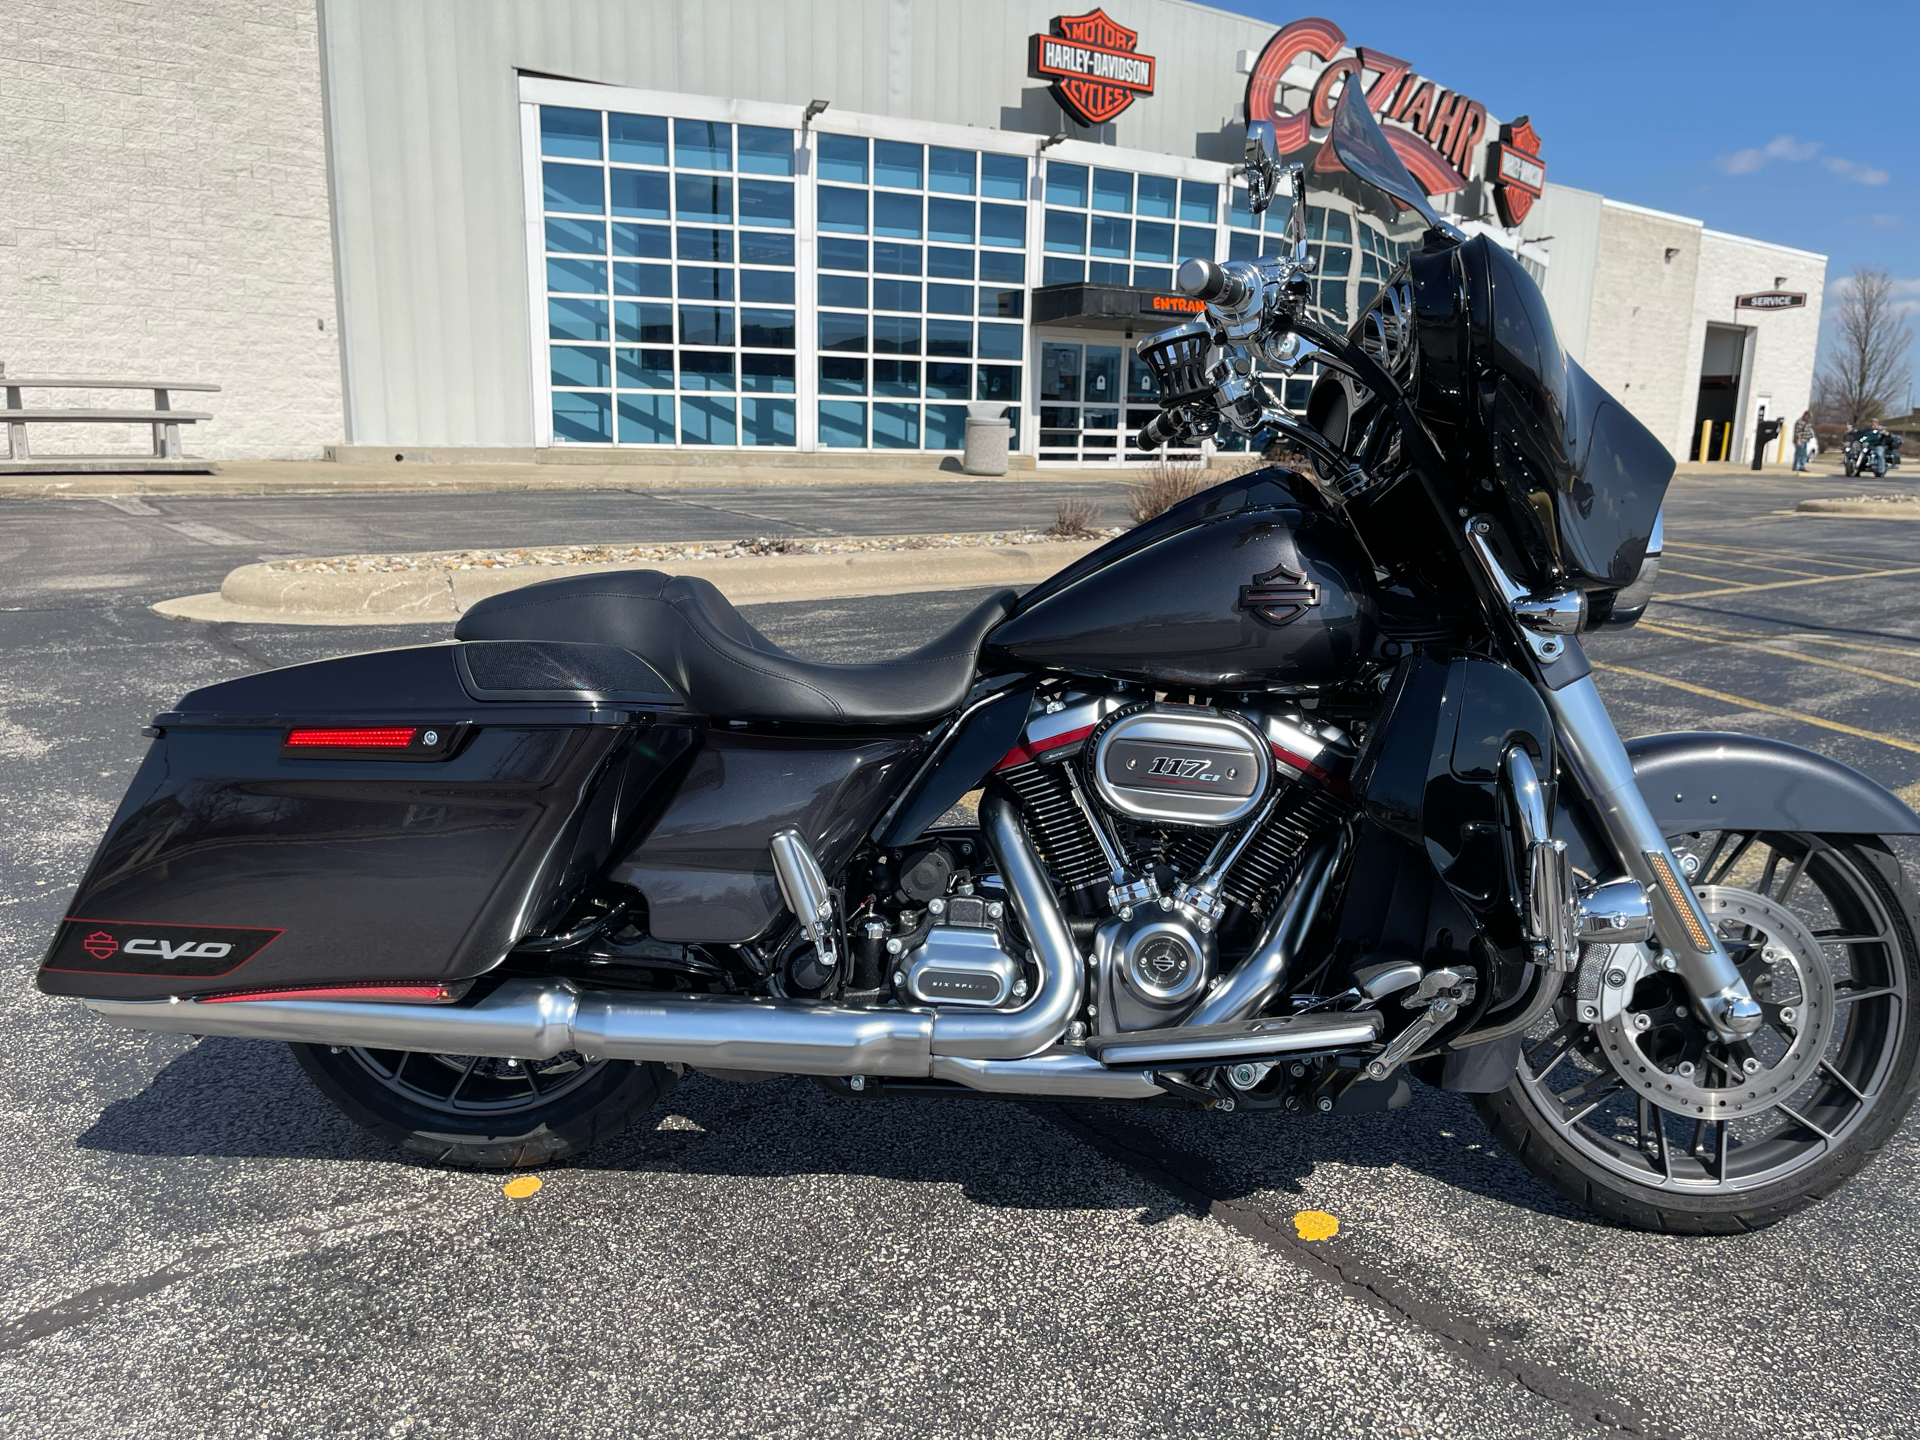 2020 Harley-Davidson CVO™ Street Glide® in Forsyth, Illinois - Photo 1